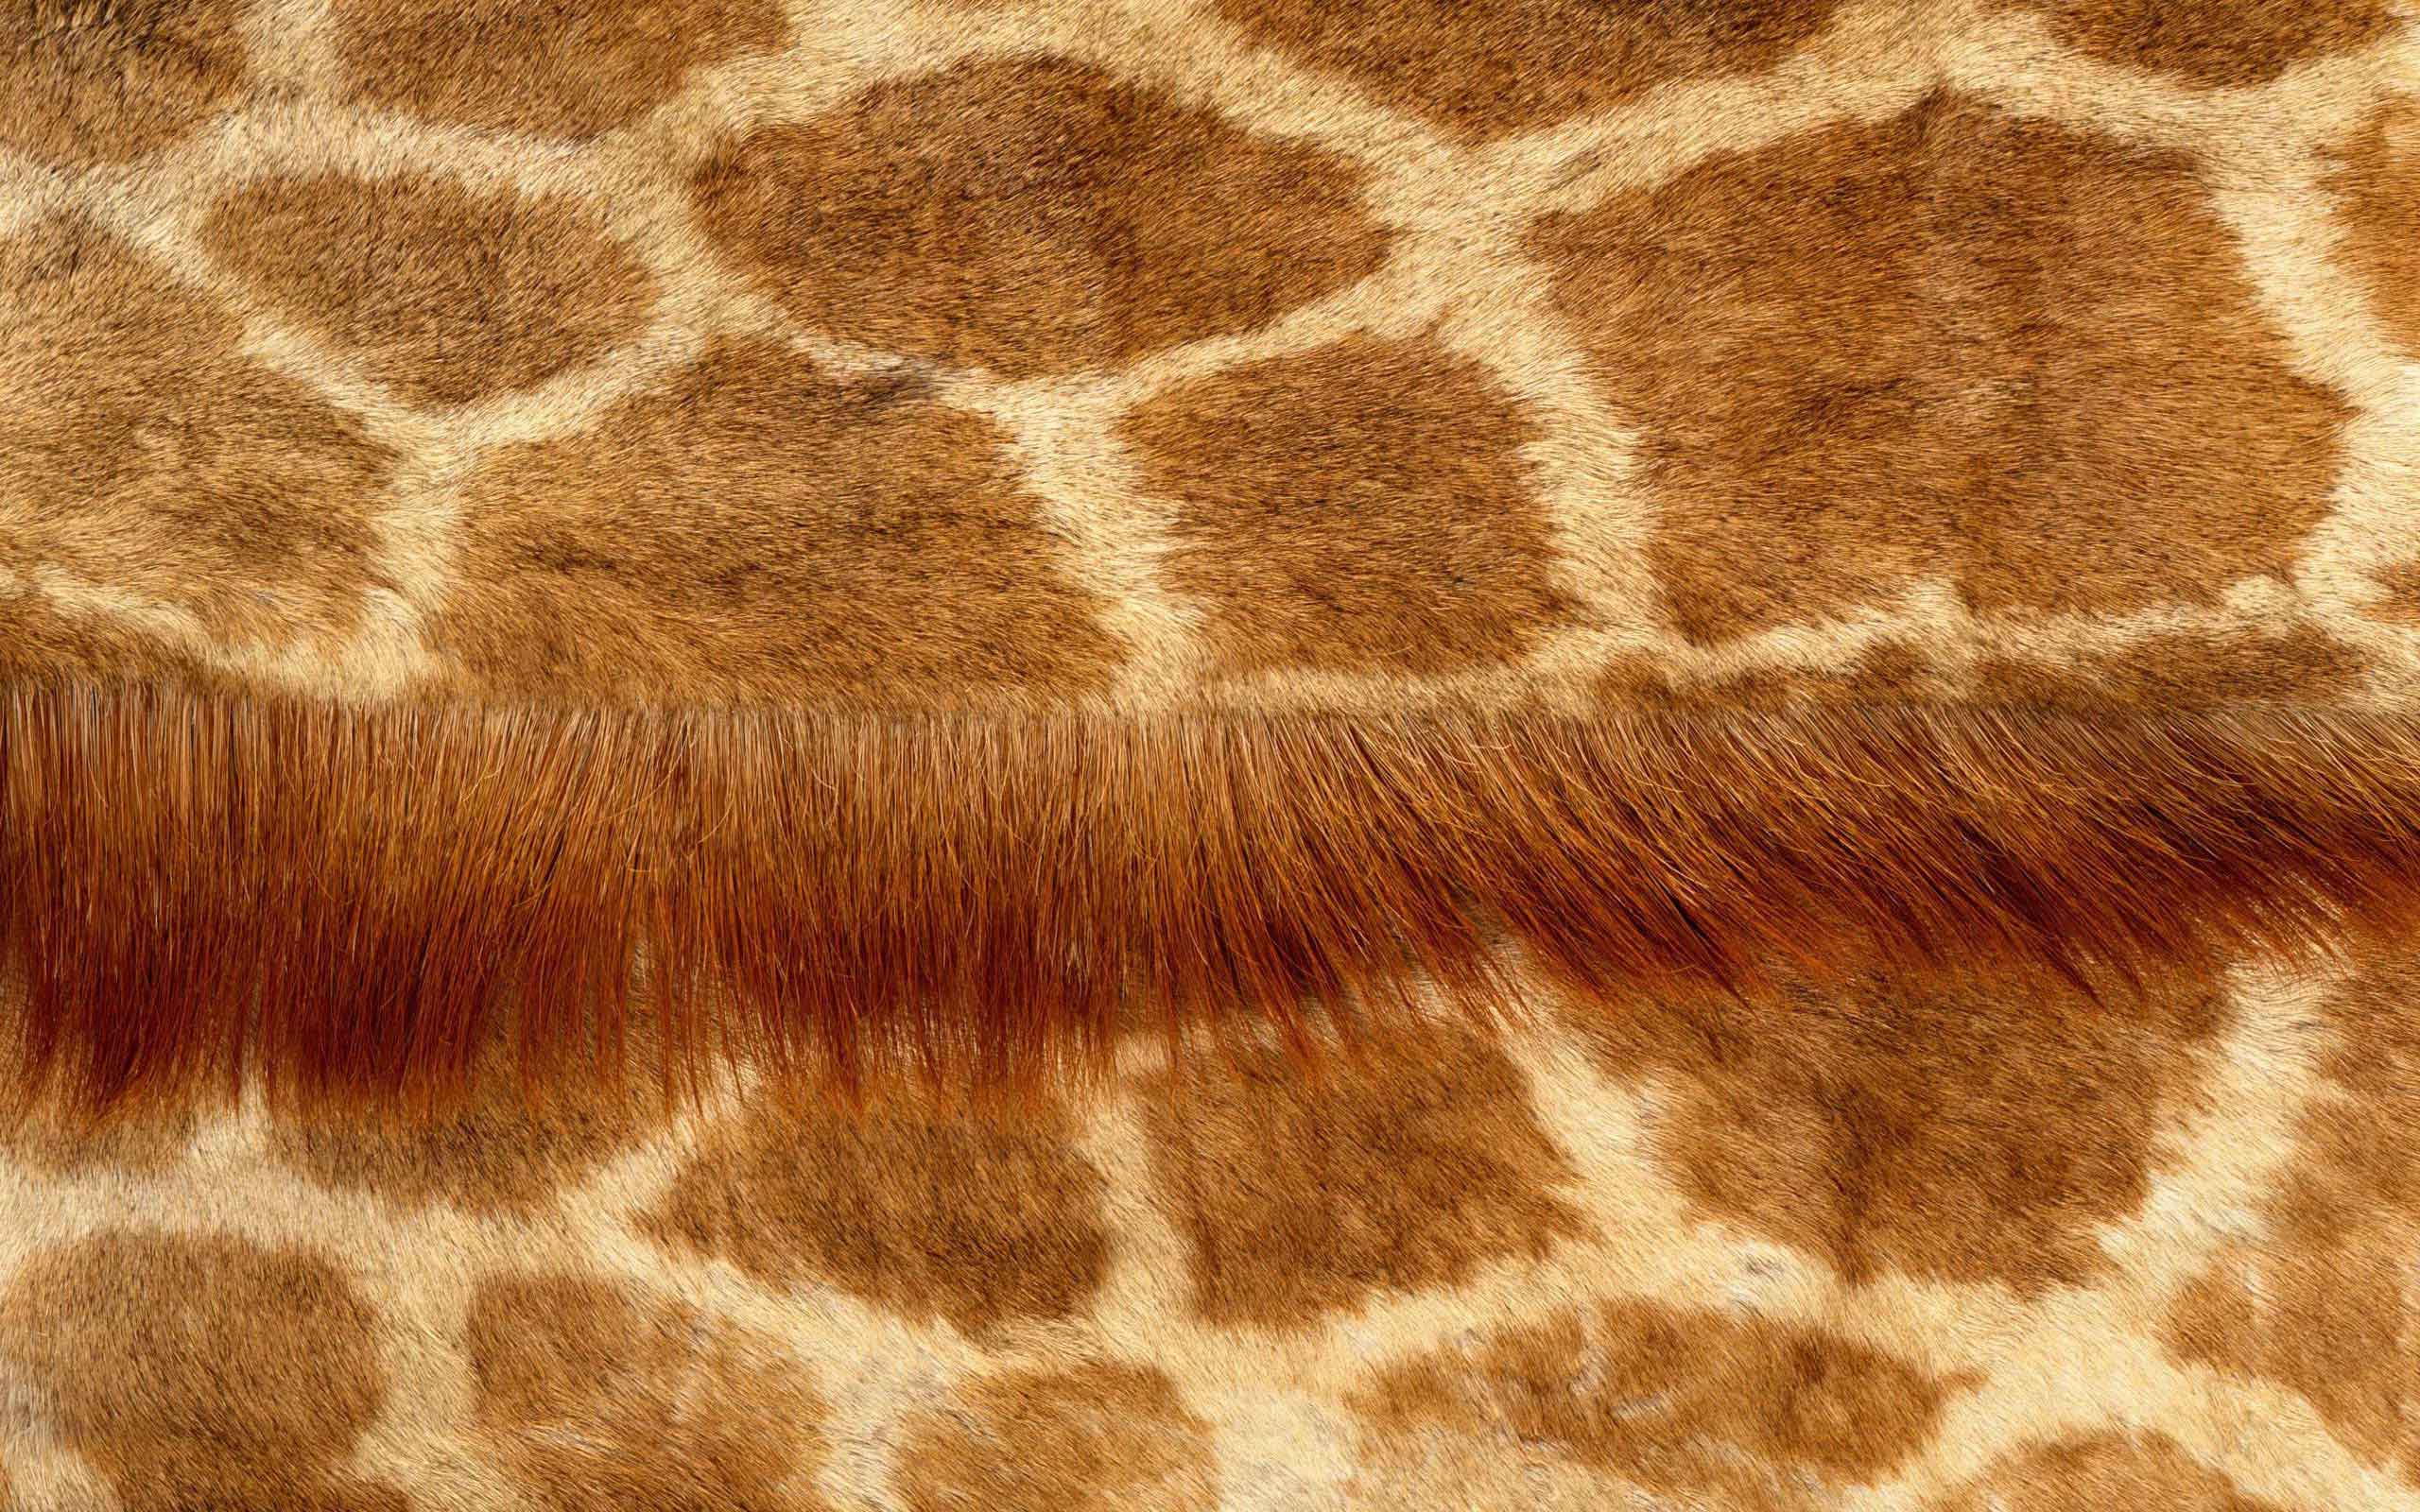 giraff pattern skin wallpapers